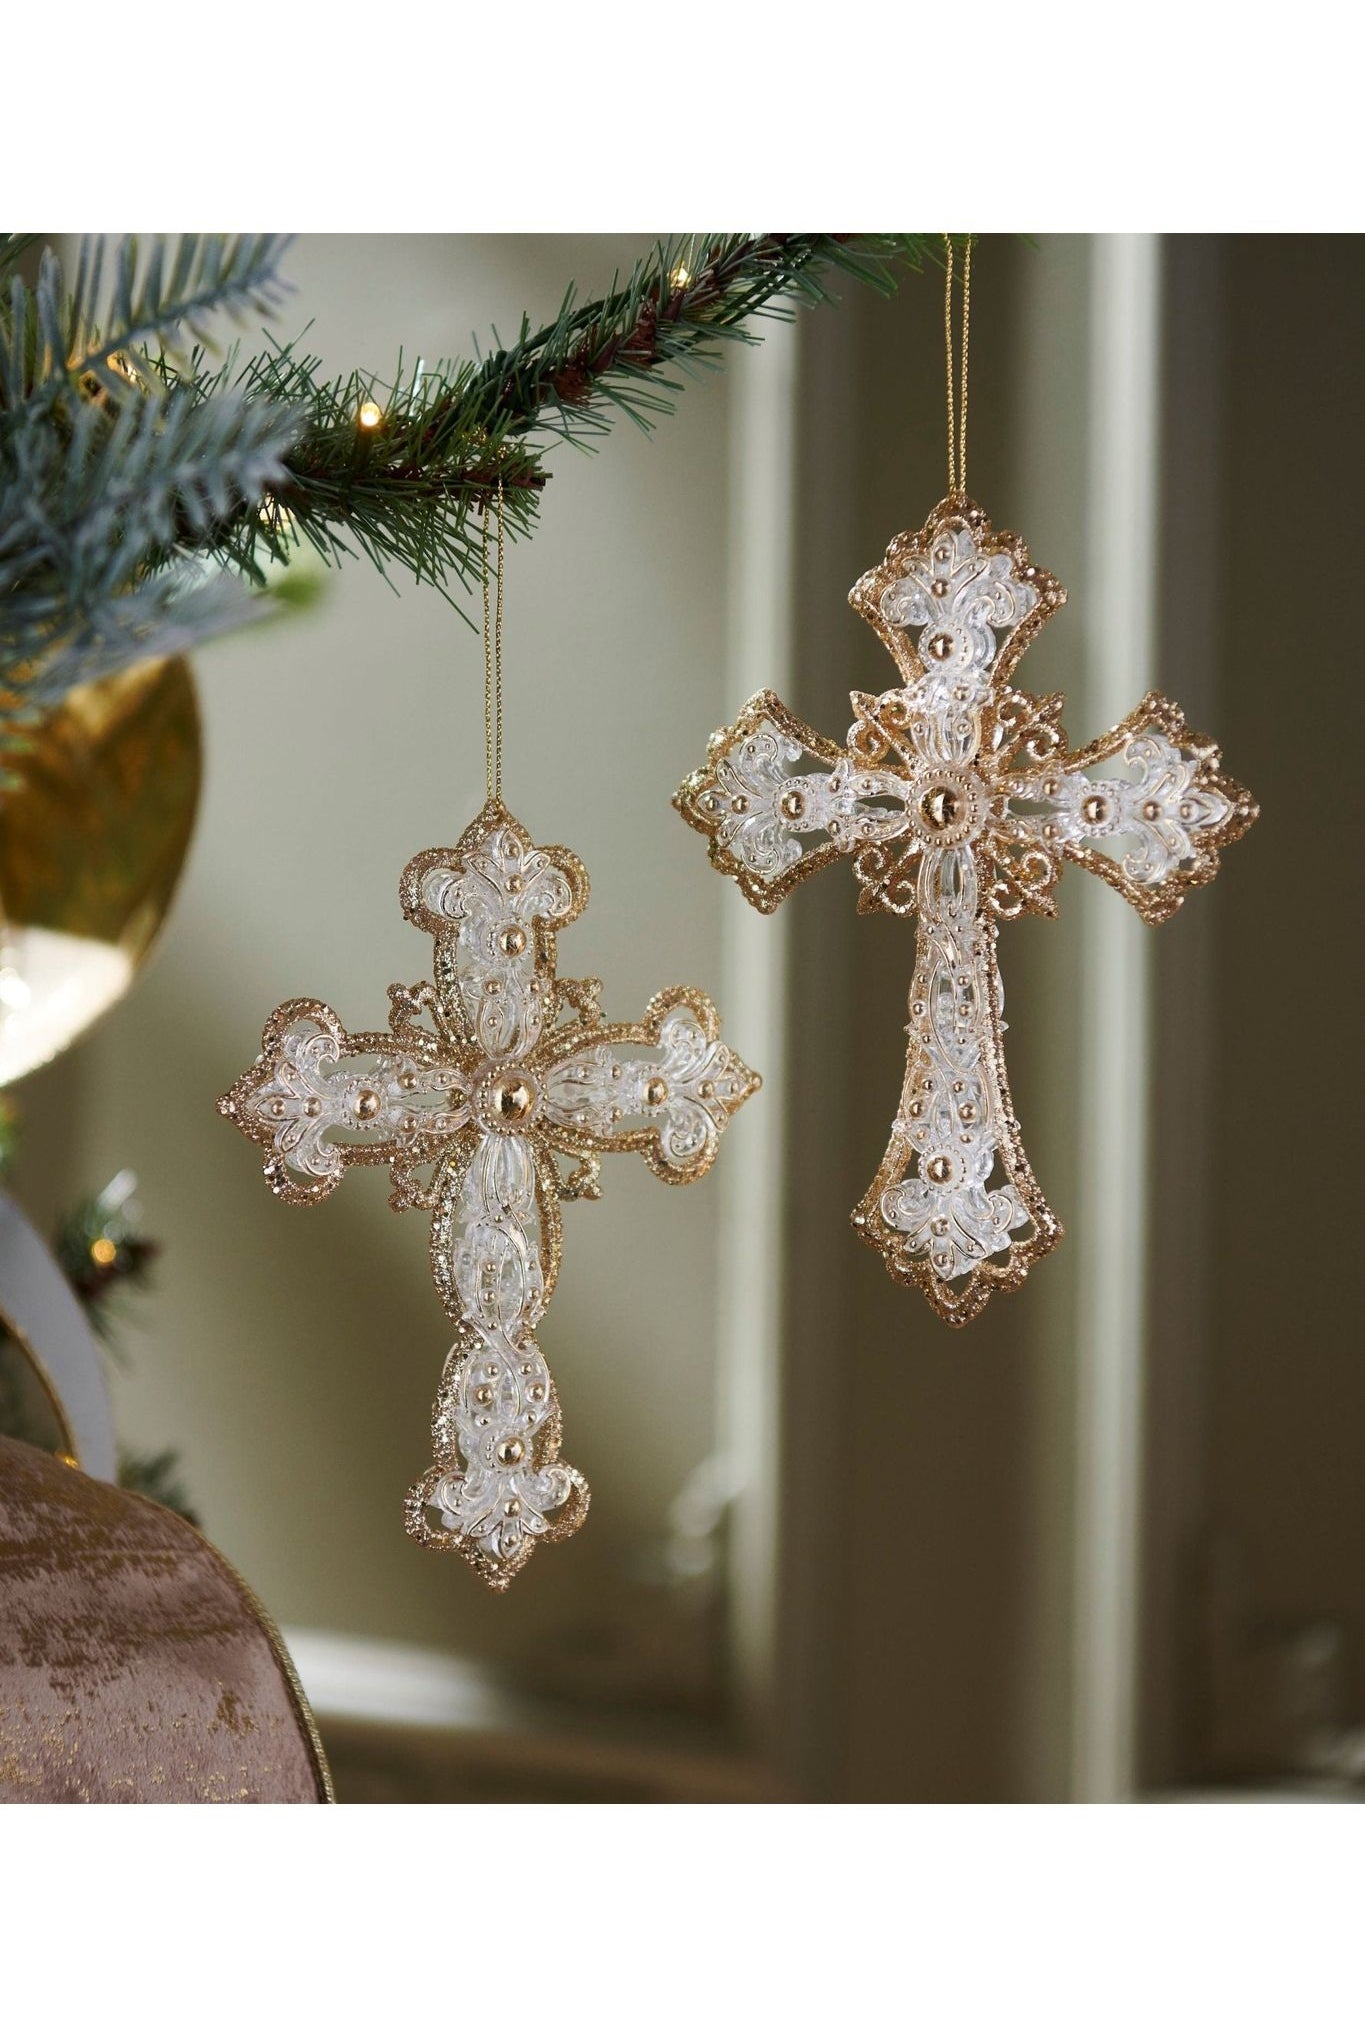 Shop For 5" Jeweled Cross Ornament (Asst 2) 4019194